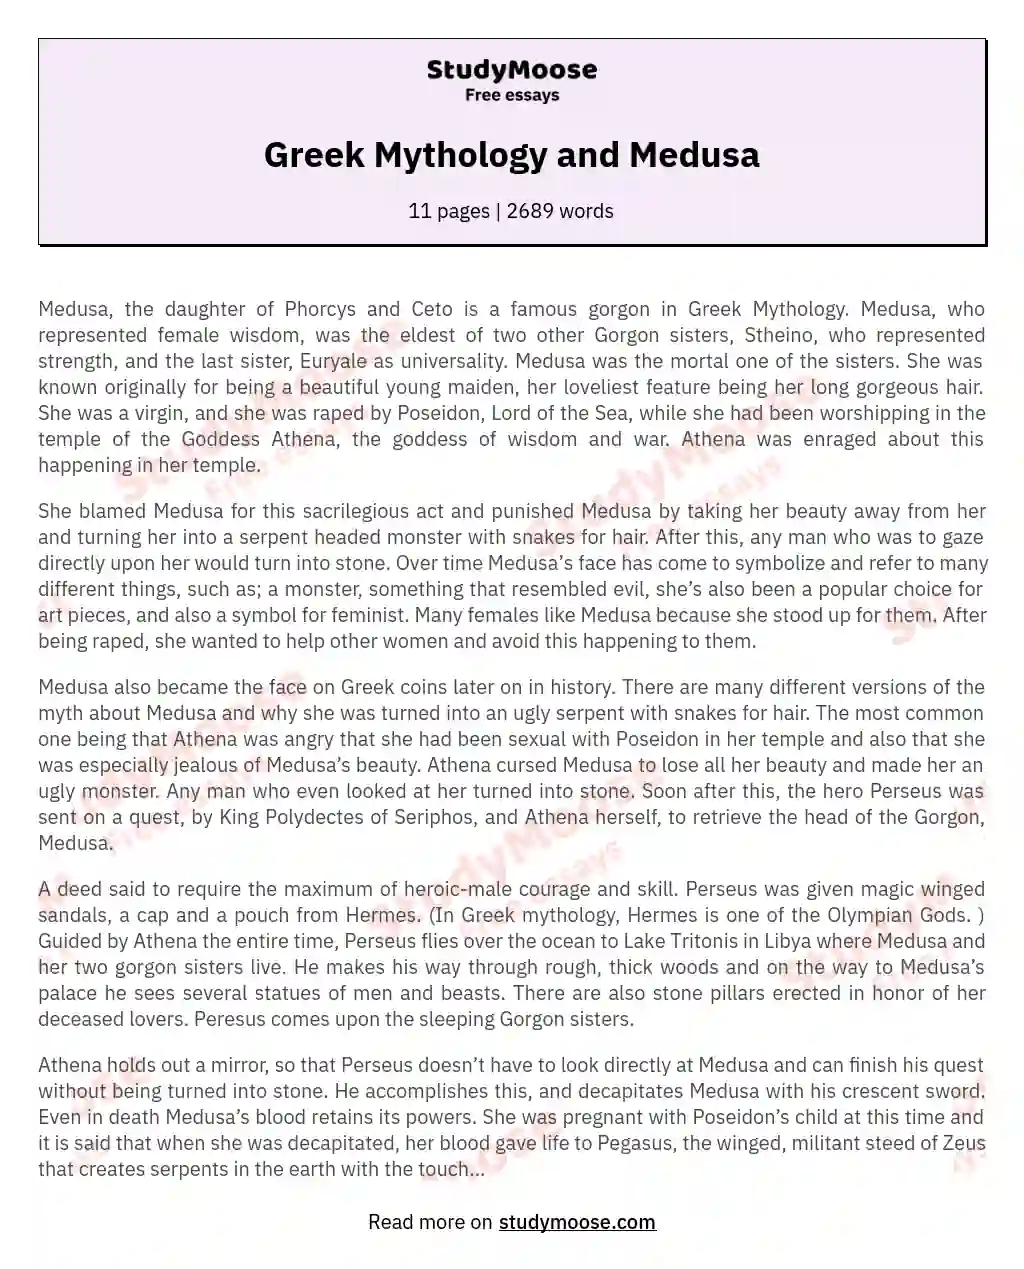 Greek Mythology and Medusa essay